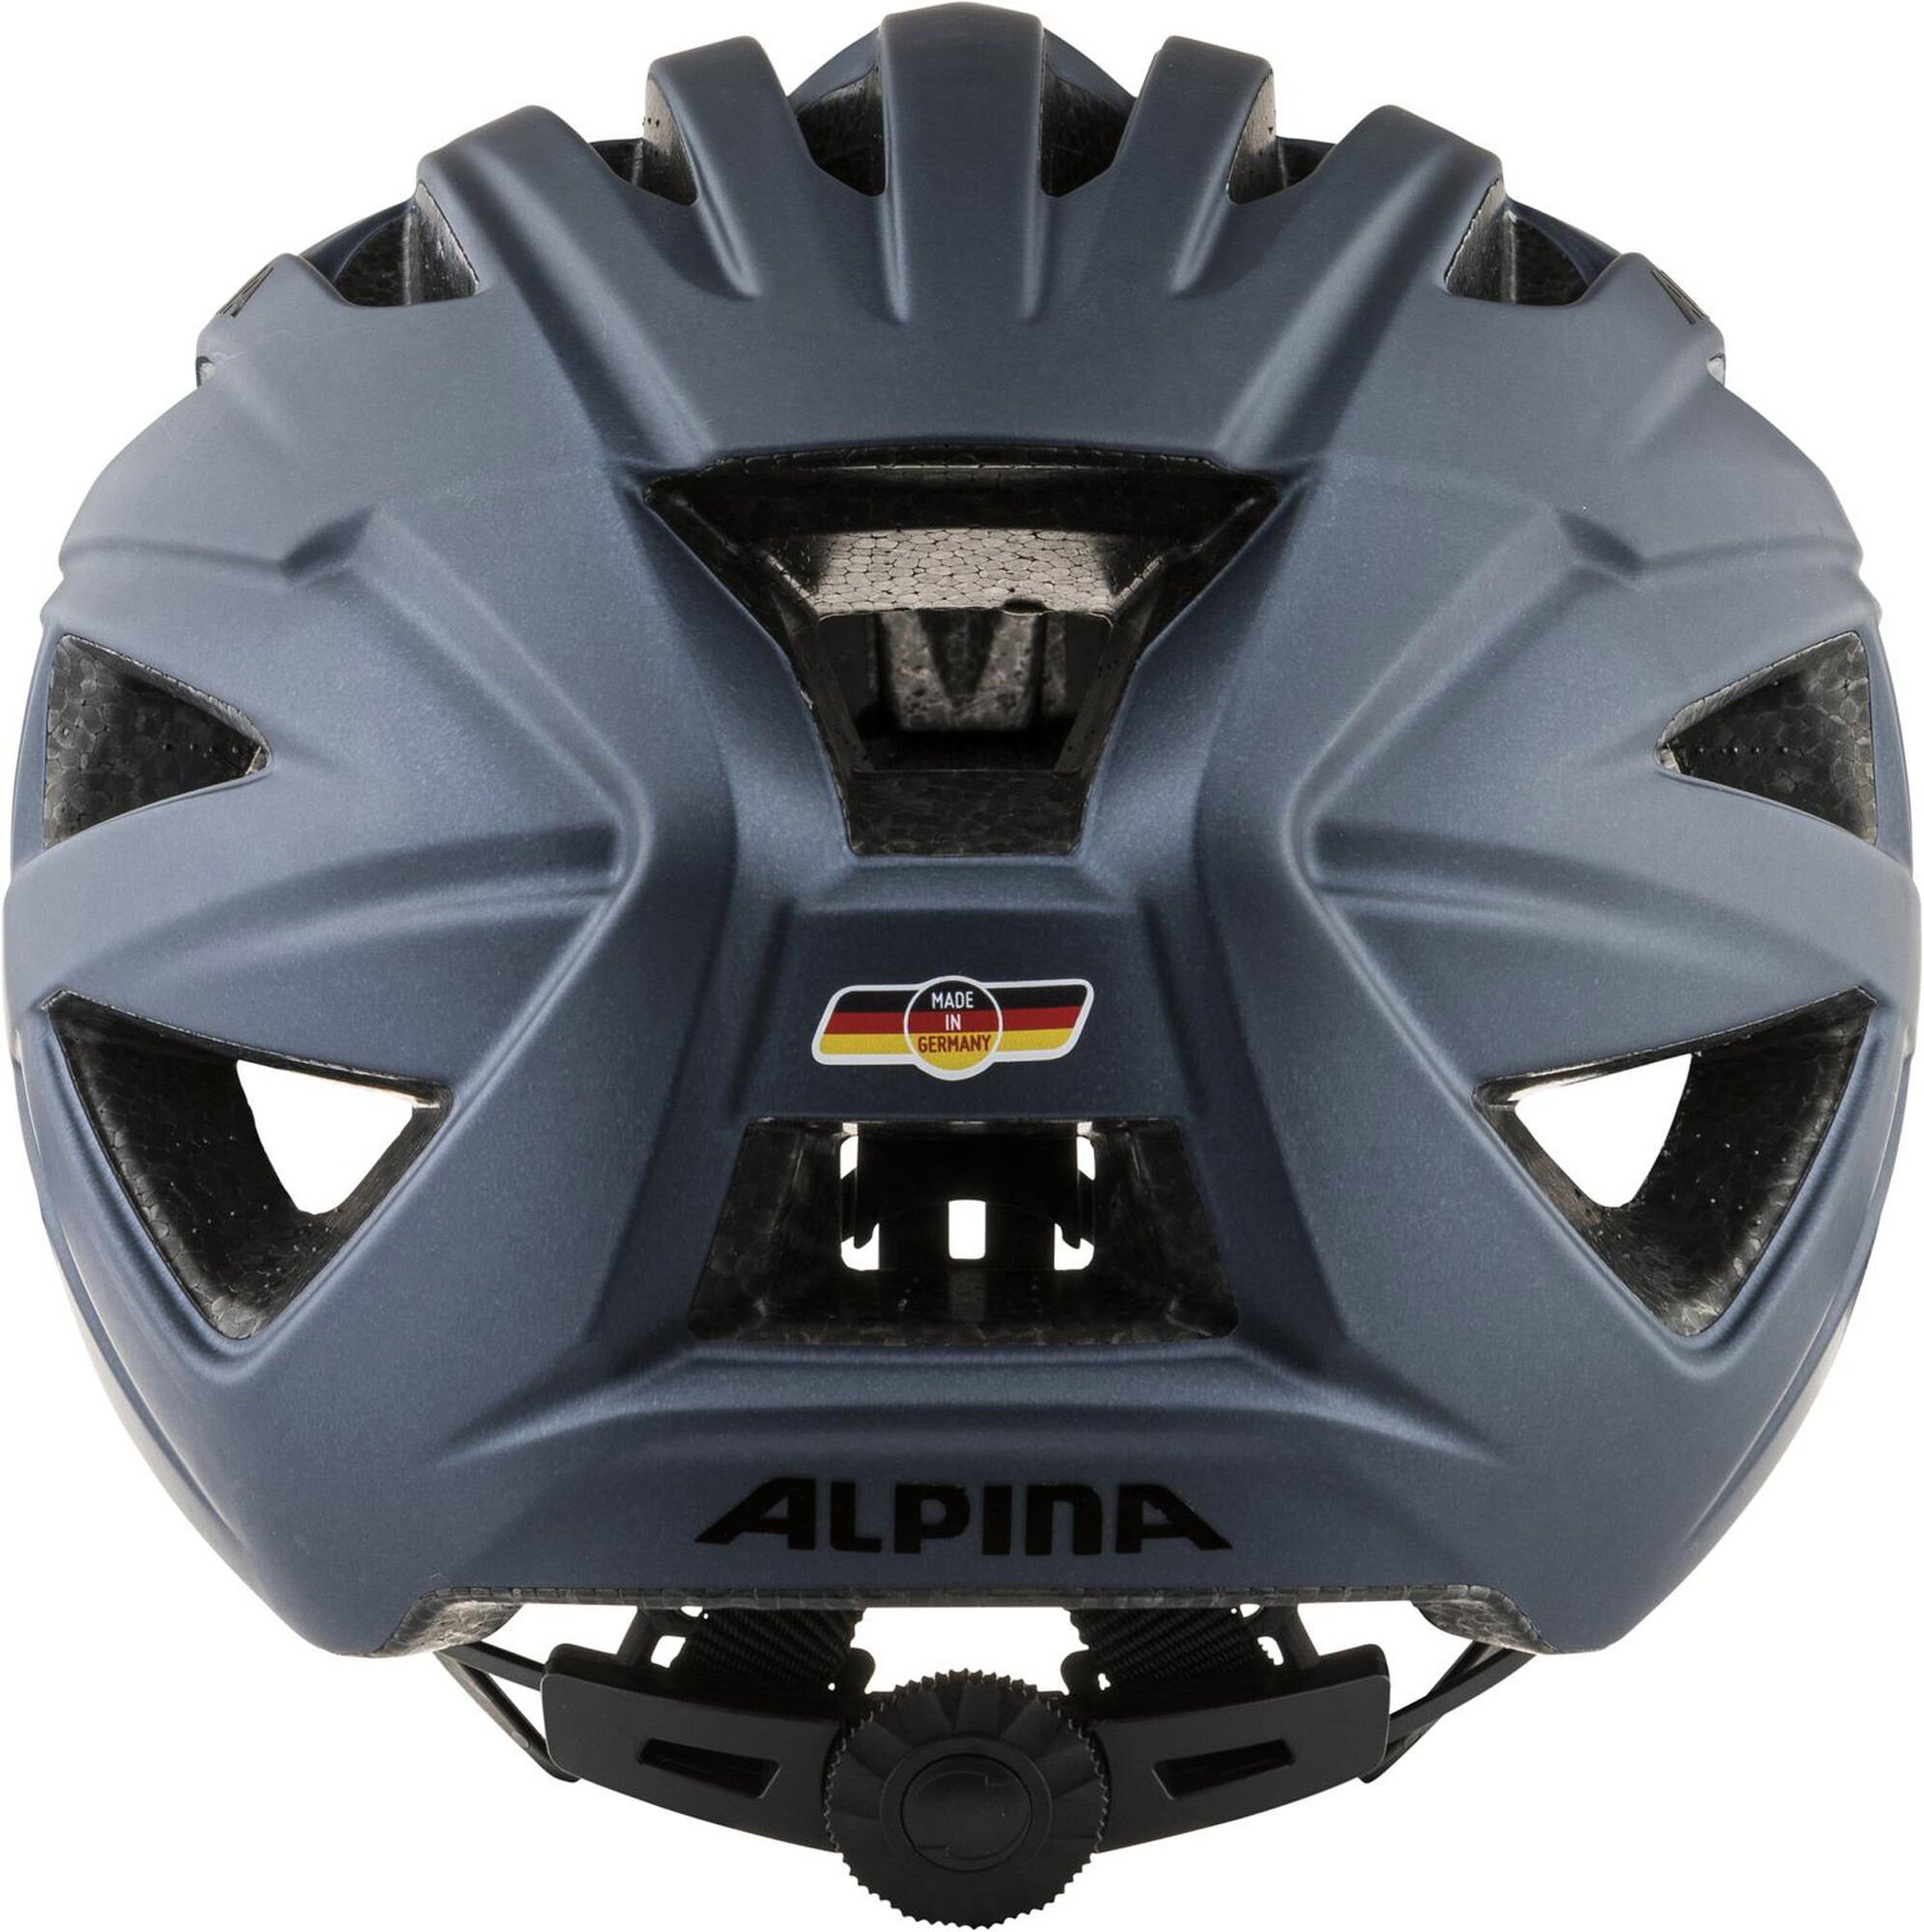 Alpina Parana Helmet